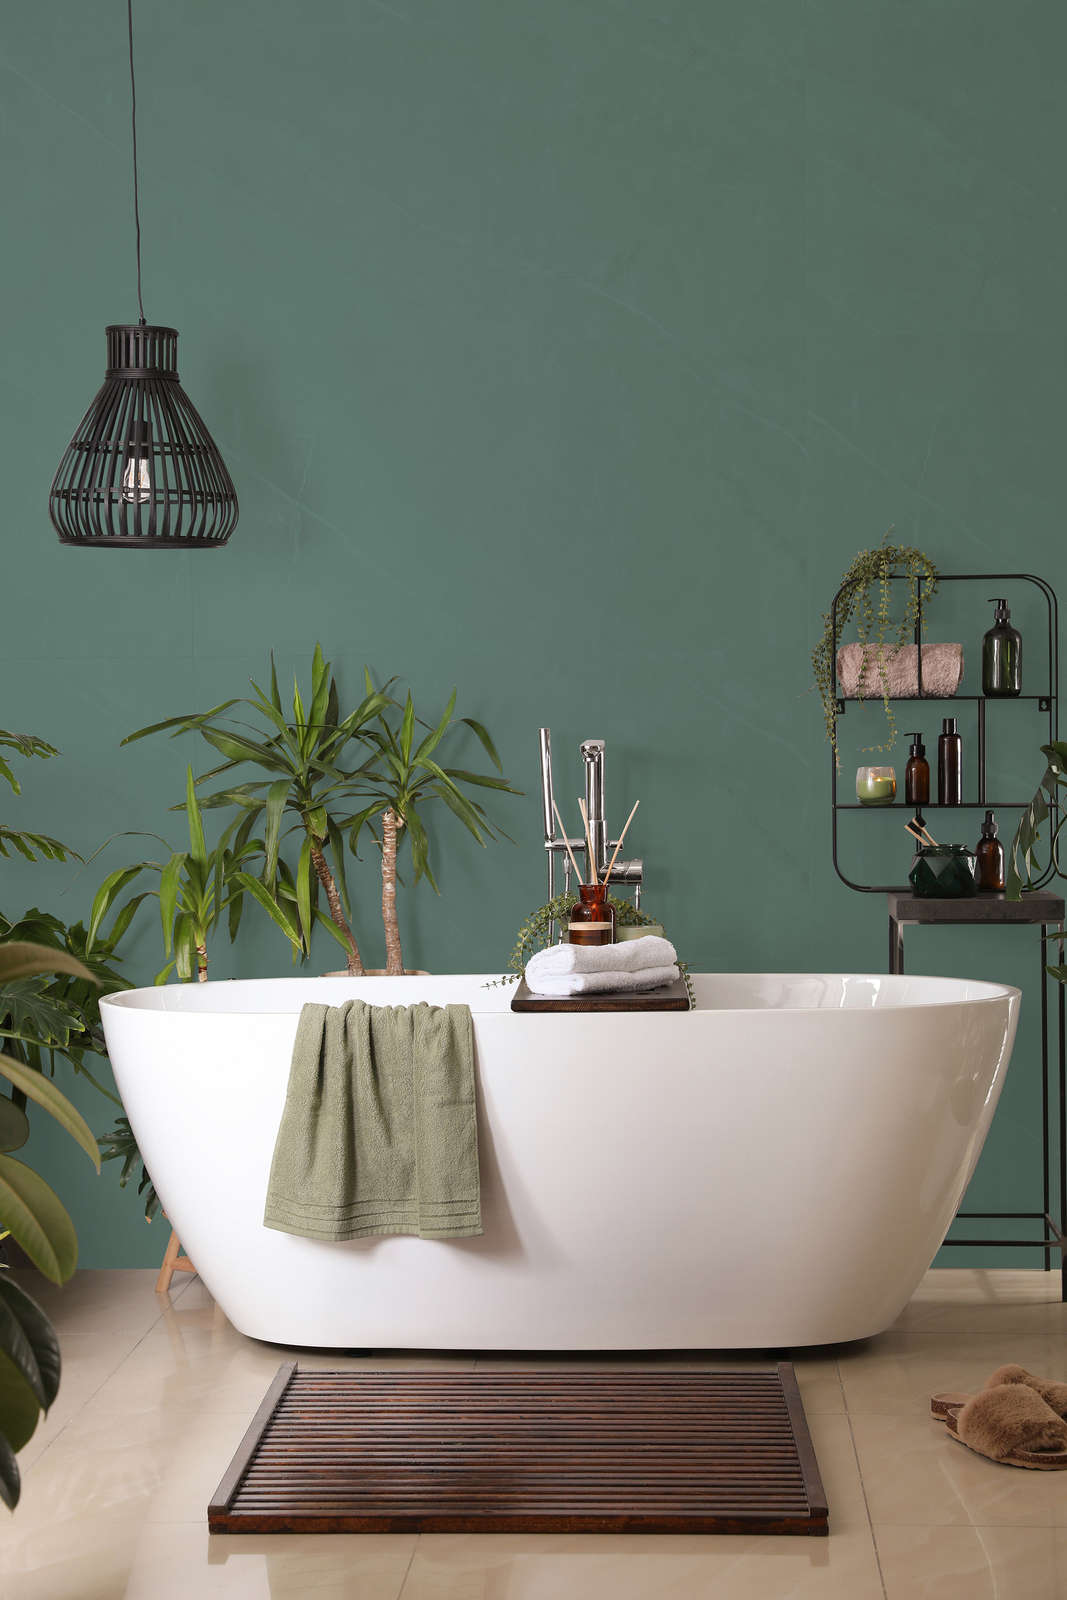             Premium Wandfarbe ruhiges Eukalyptus »Expressive Emerald« NW410 – 5 Liter
        